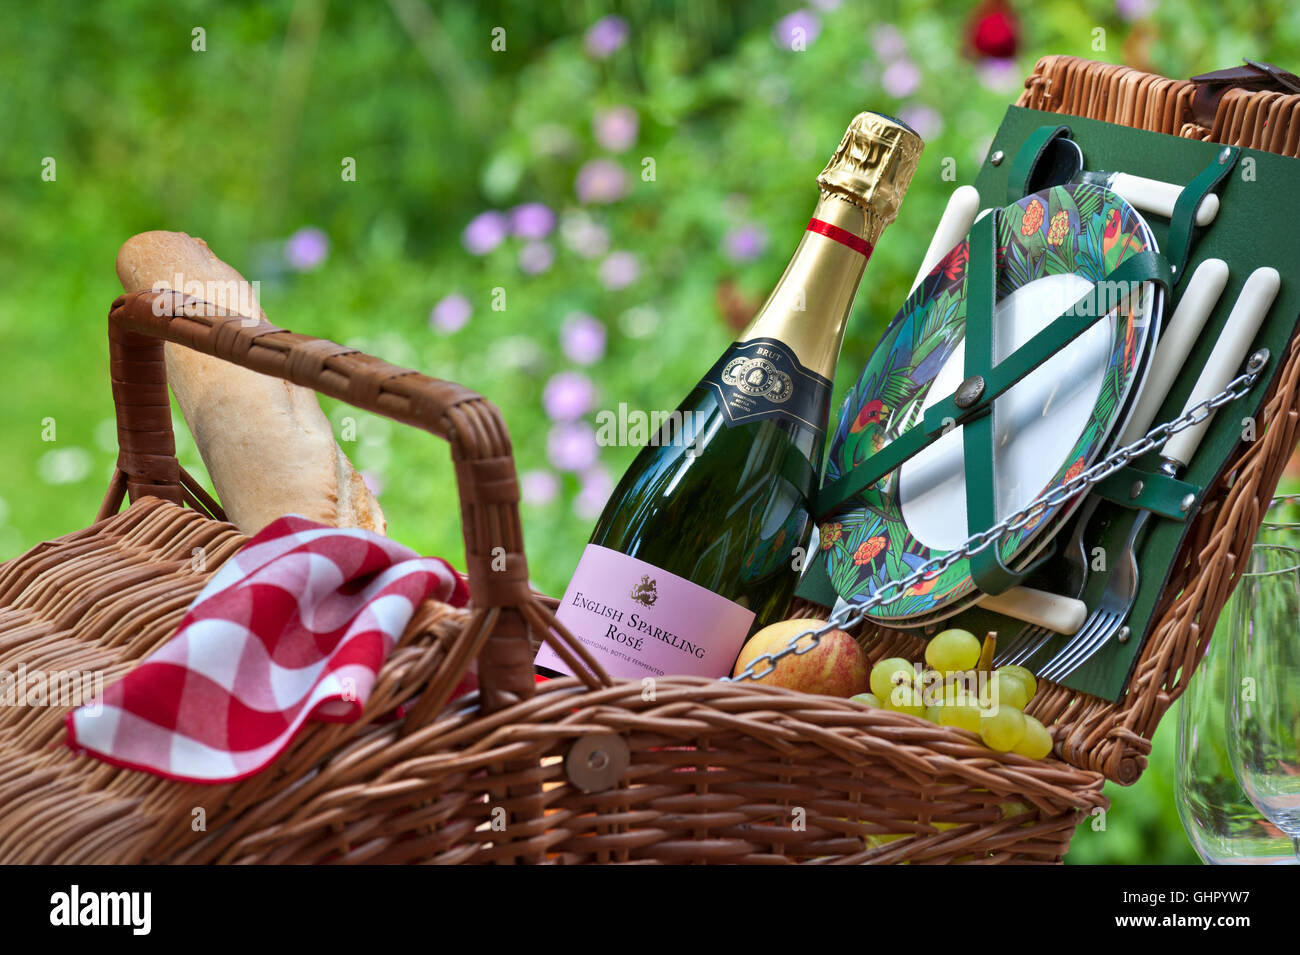 English sparkling Rosé Wine bottle and wicker picnic basket hamper in sunny spring summer alfresco floral UK garden situation Stock Photo